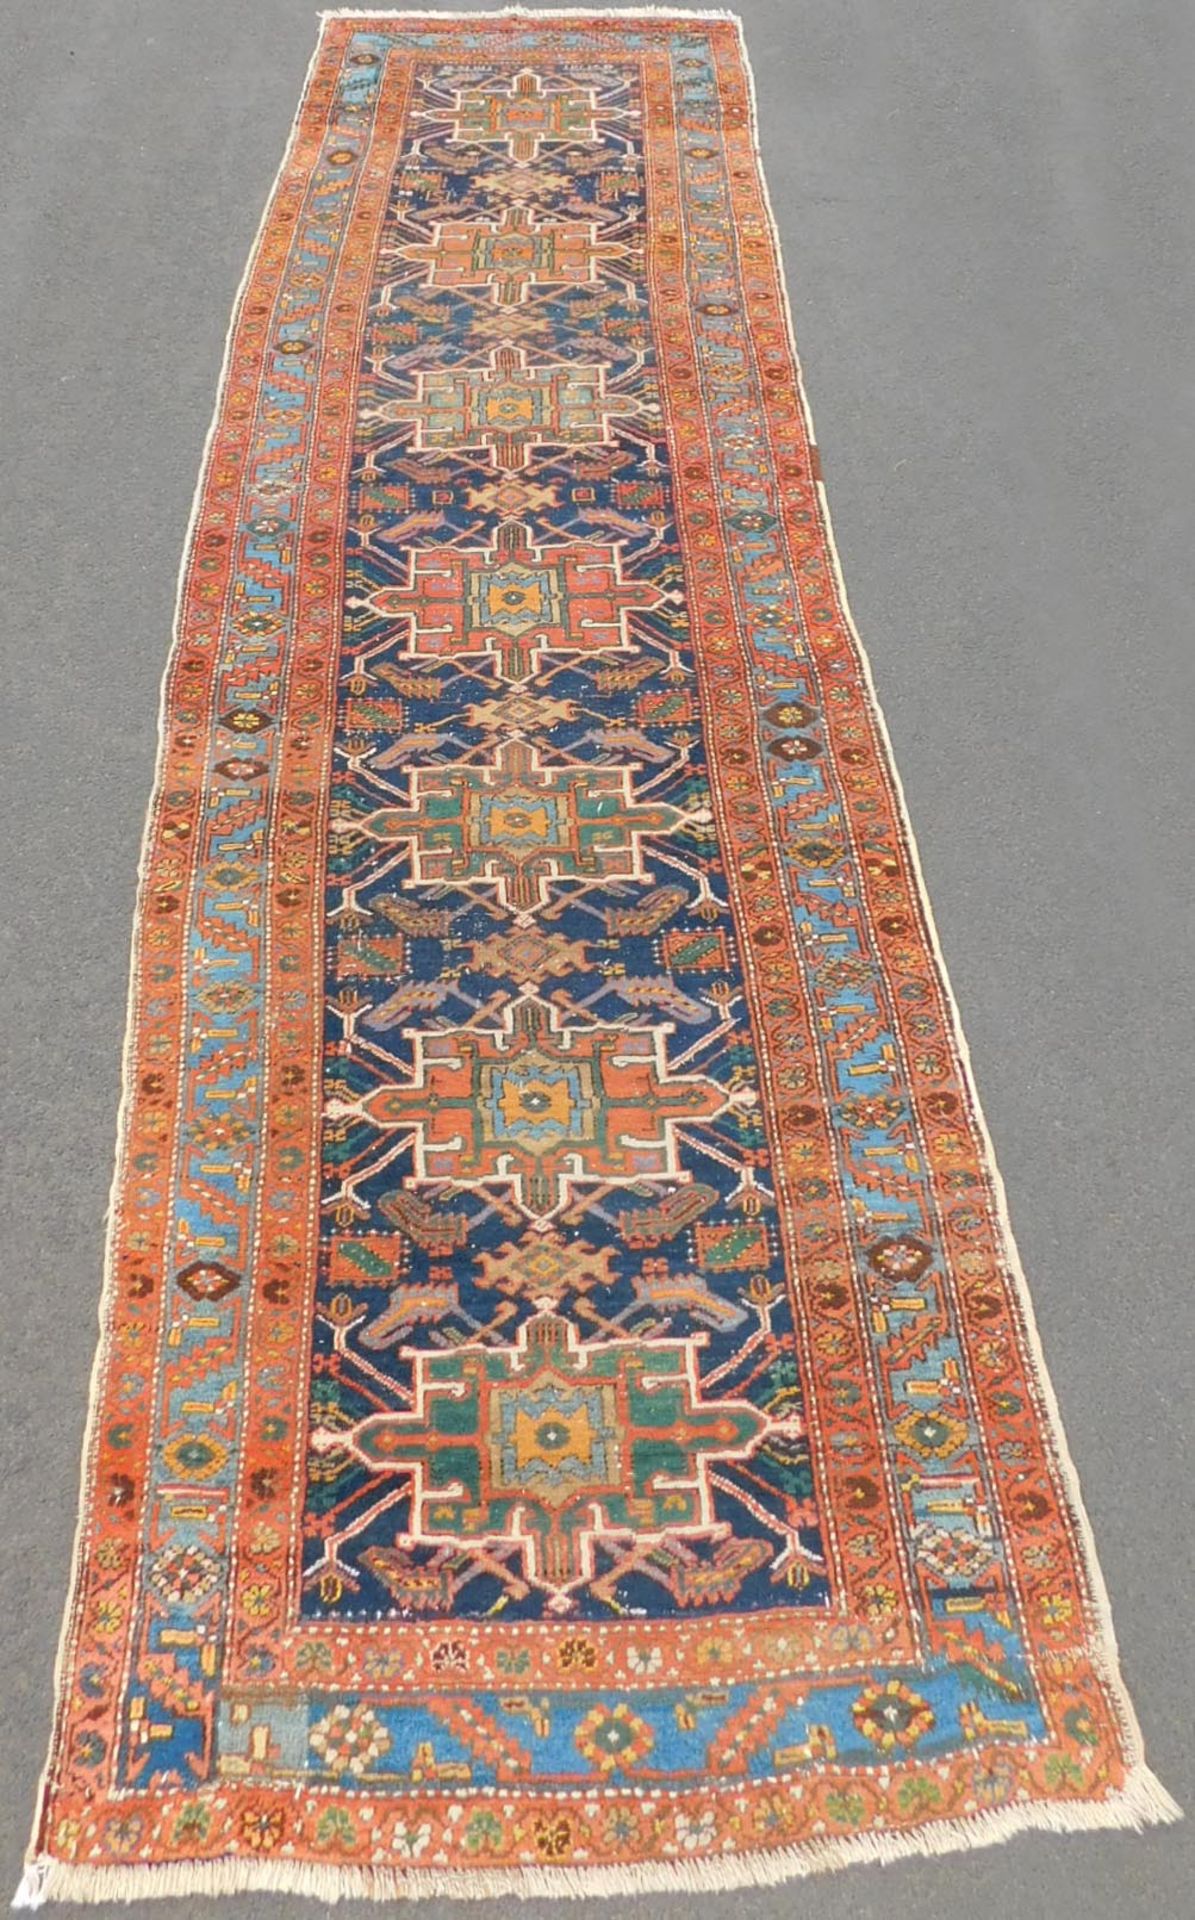 Karadja runner. Persian rug. Iran. Dated 1345 (1926).